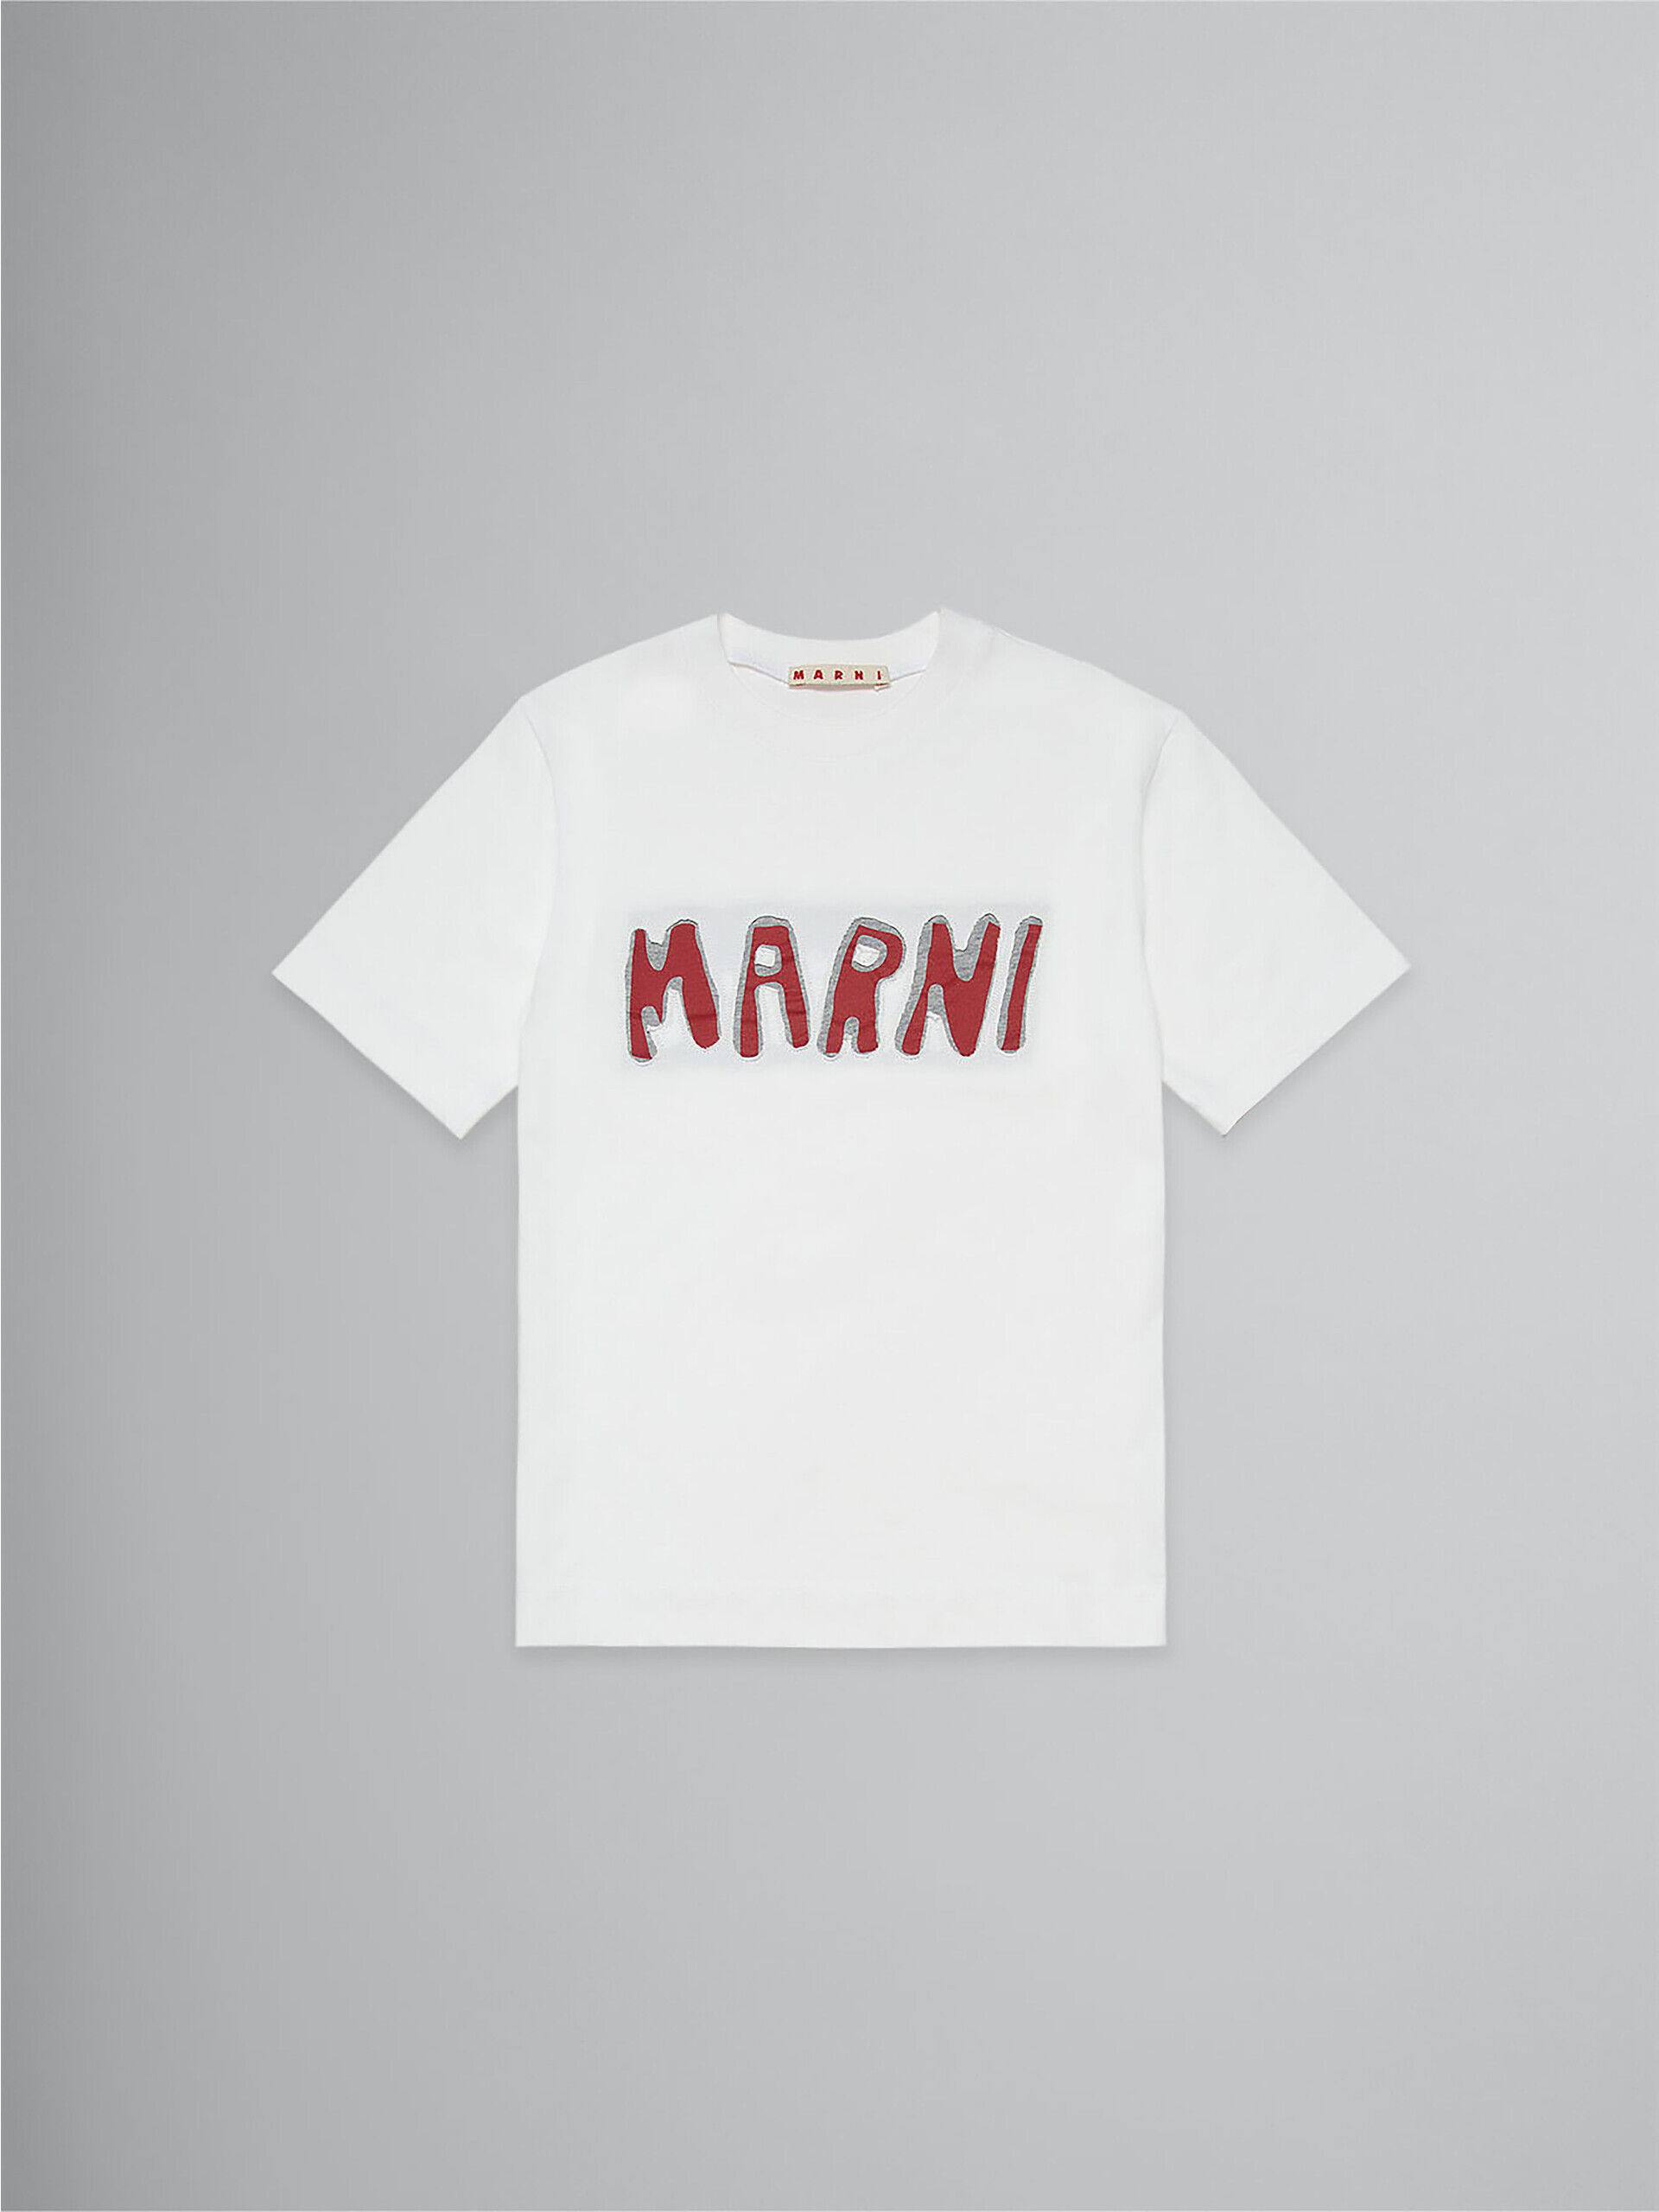 marni shirtシャツ